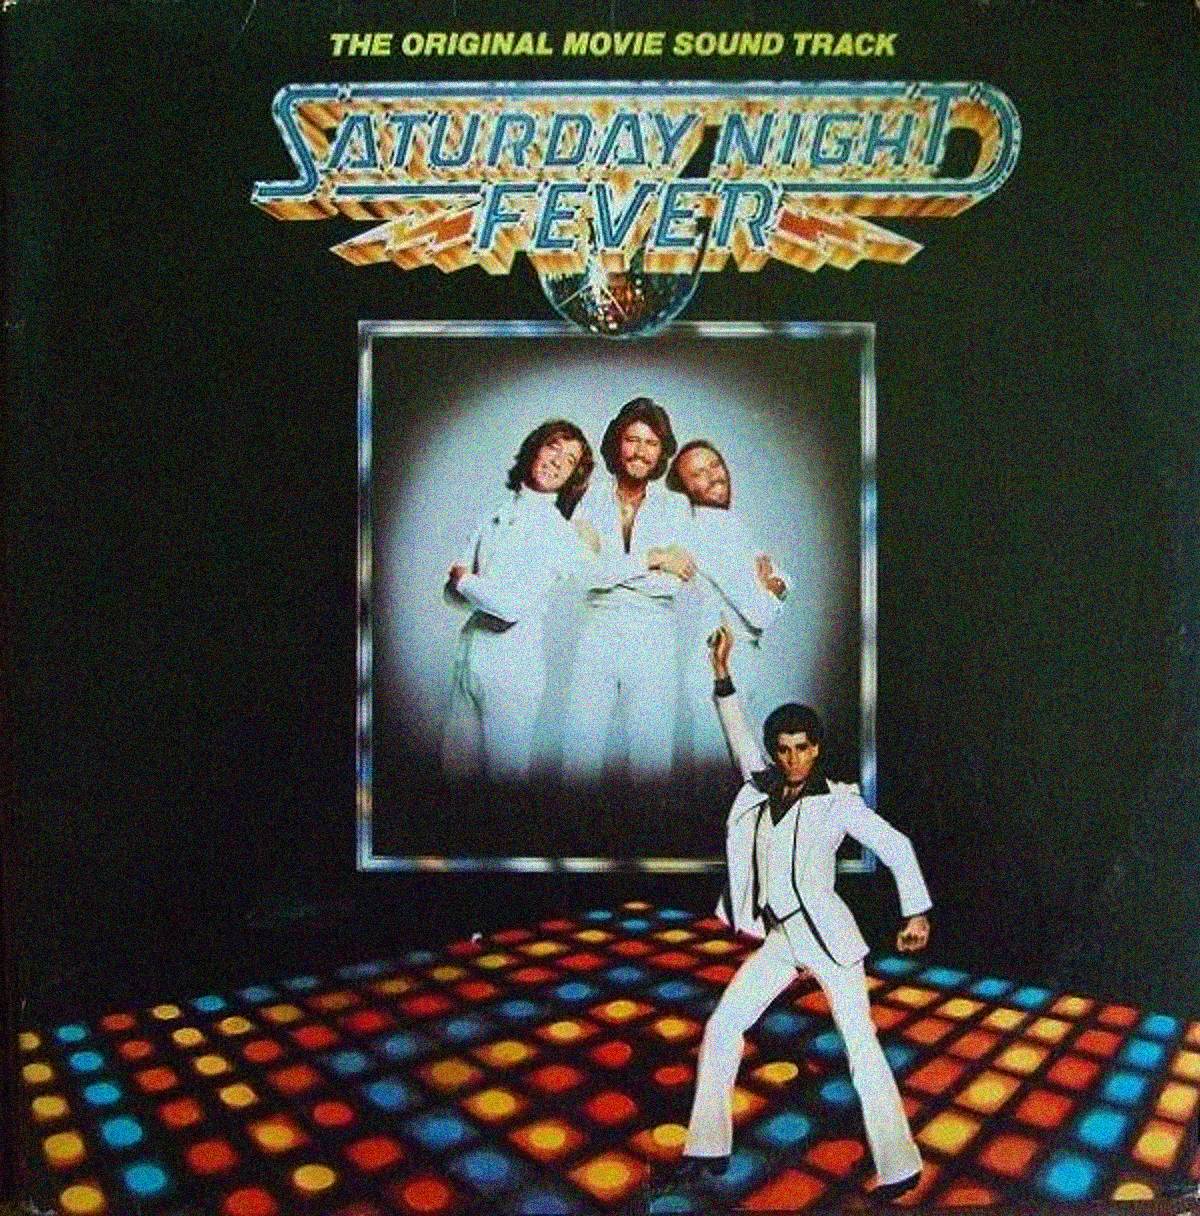 Saturday Night Fever The Original Movie Sound Track (1978)